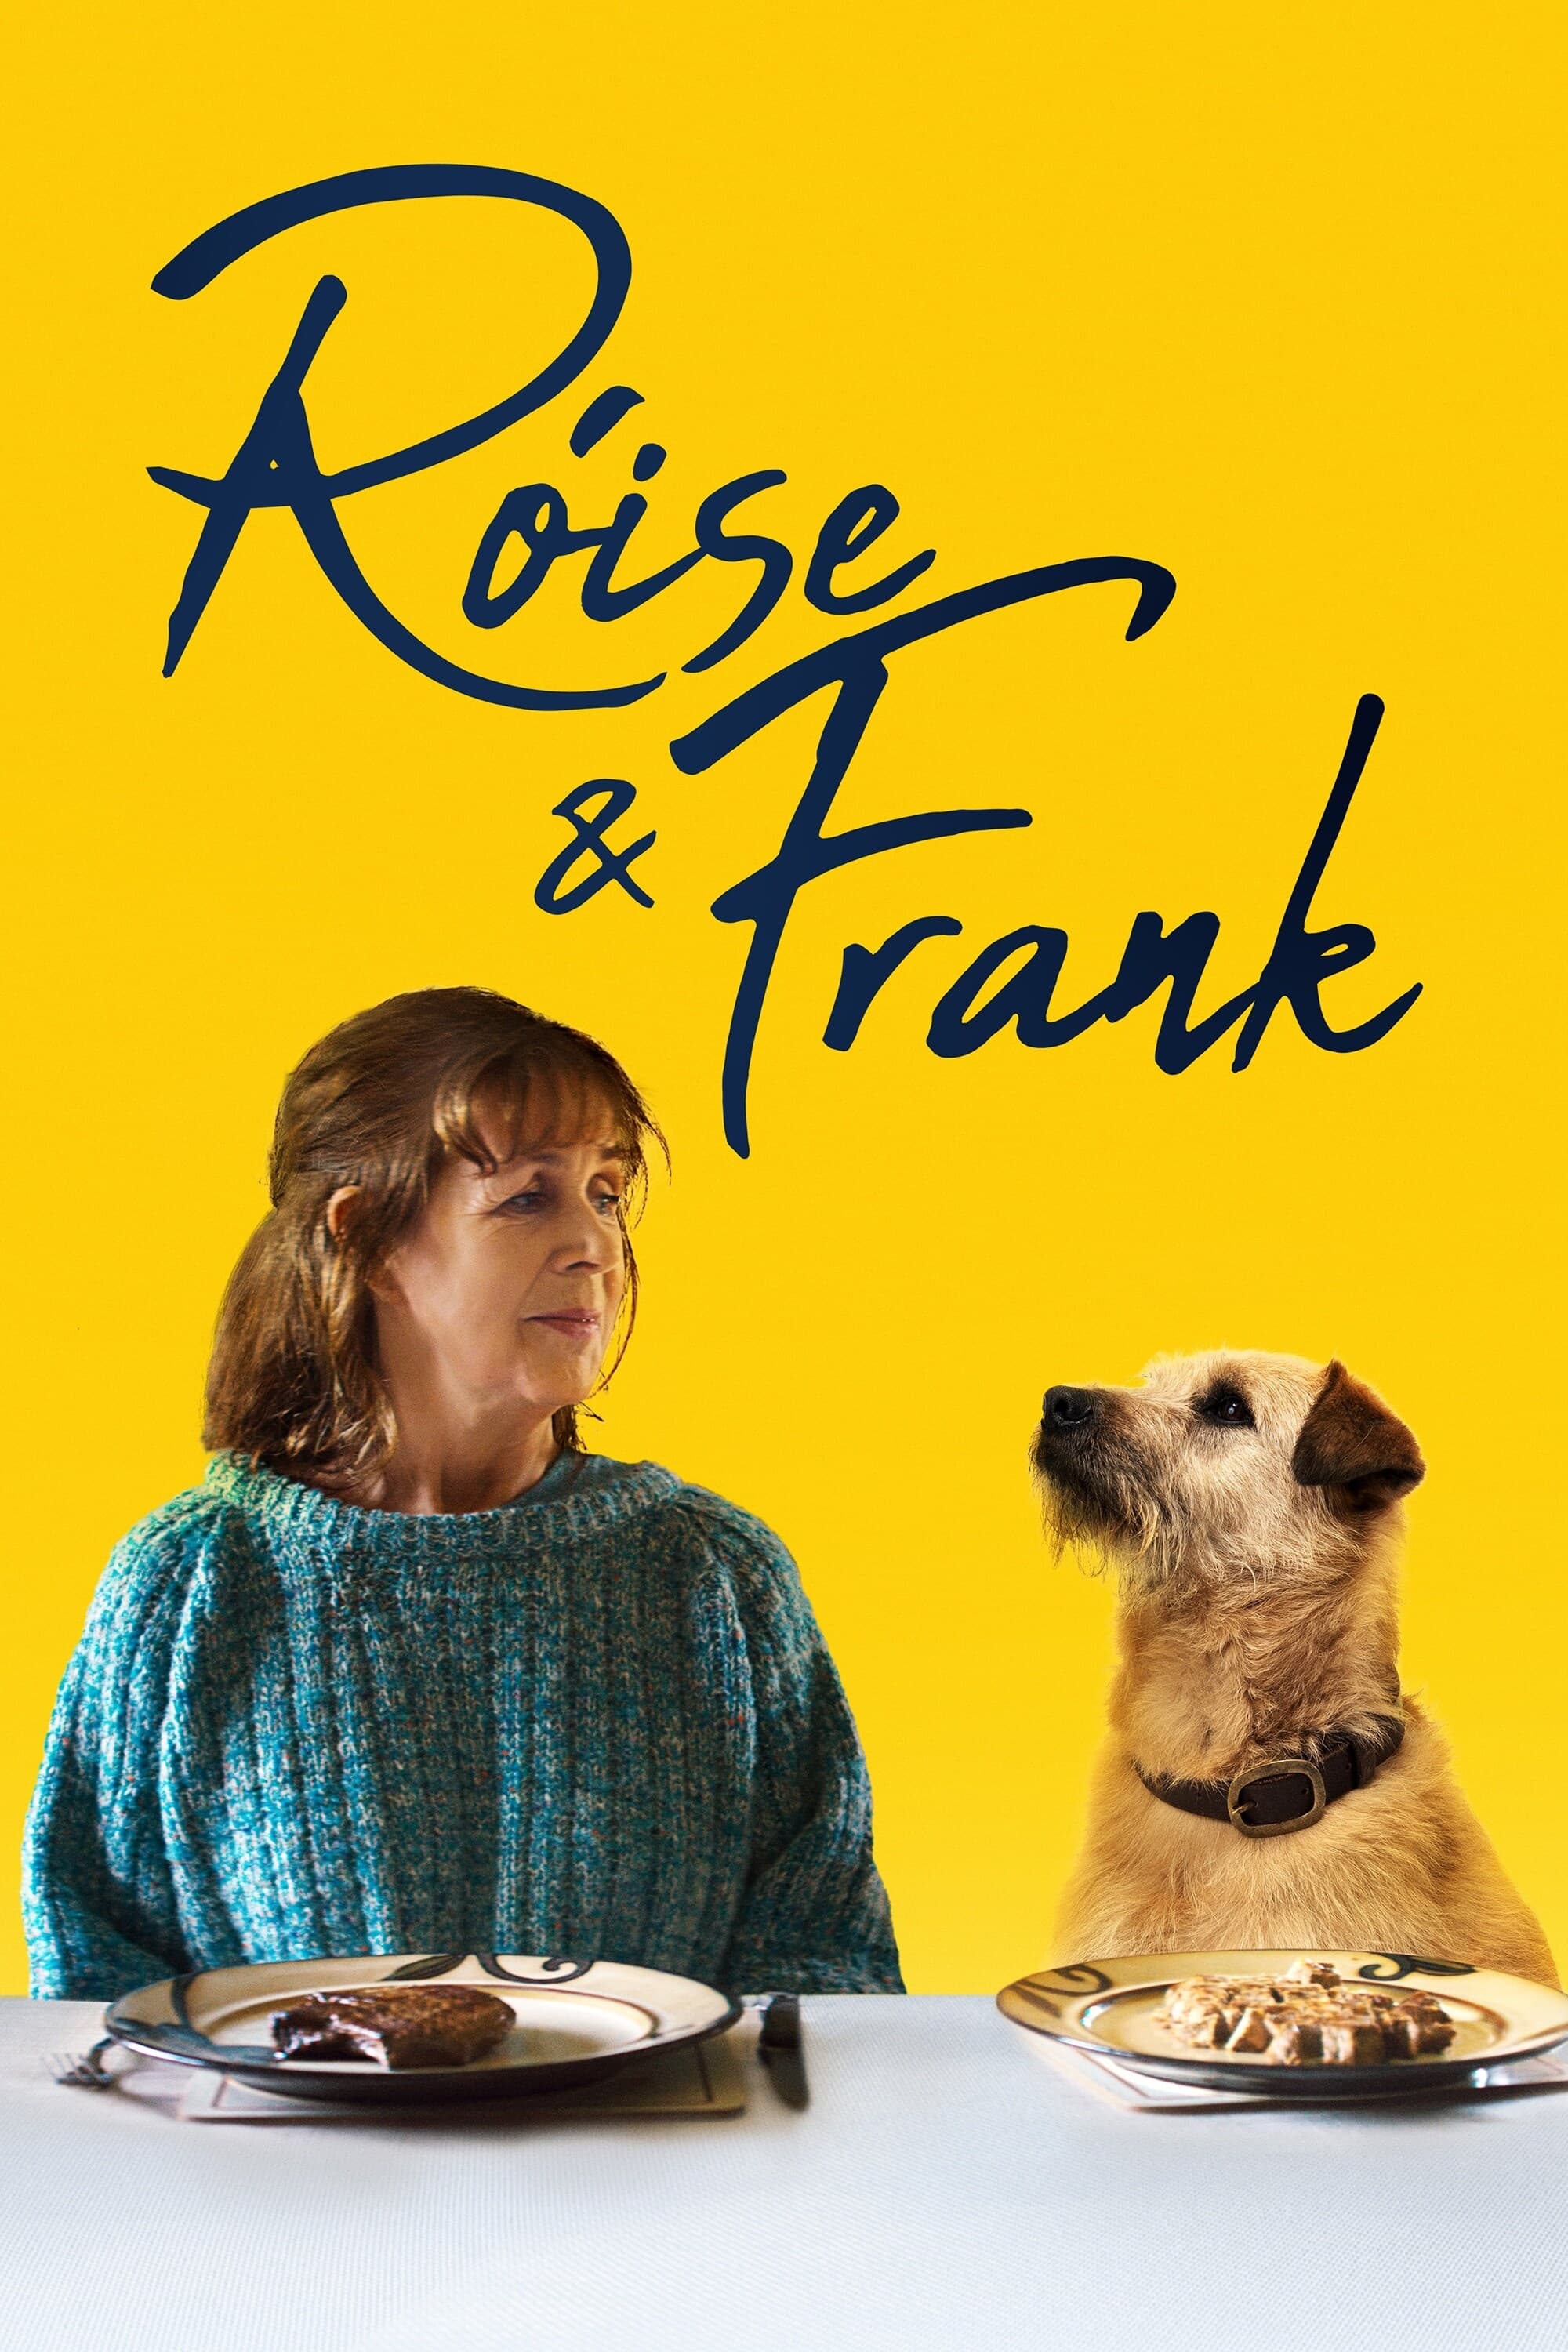 Rósie & Frank